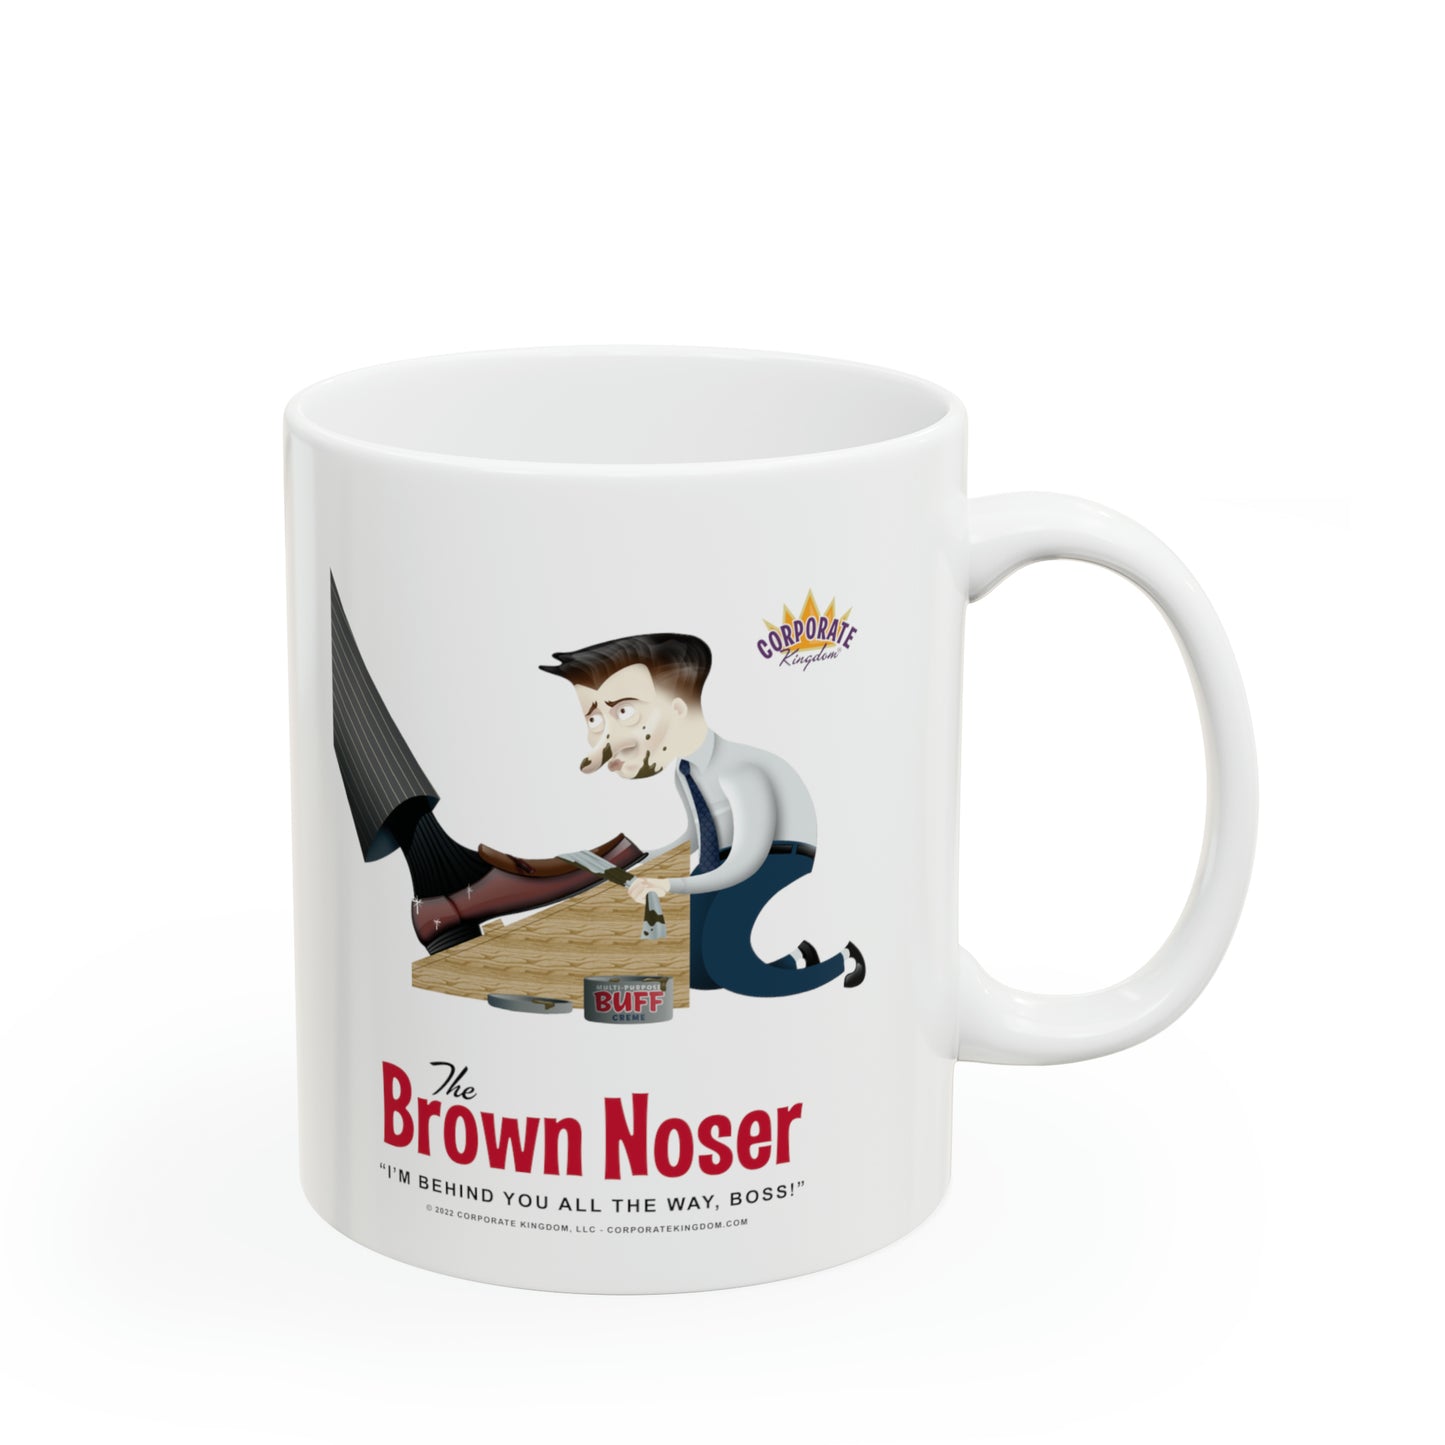 Brown Noser Coffee Mug by Corporate Kingdom®